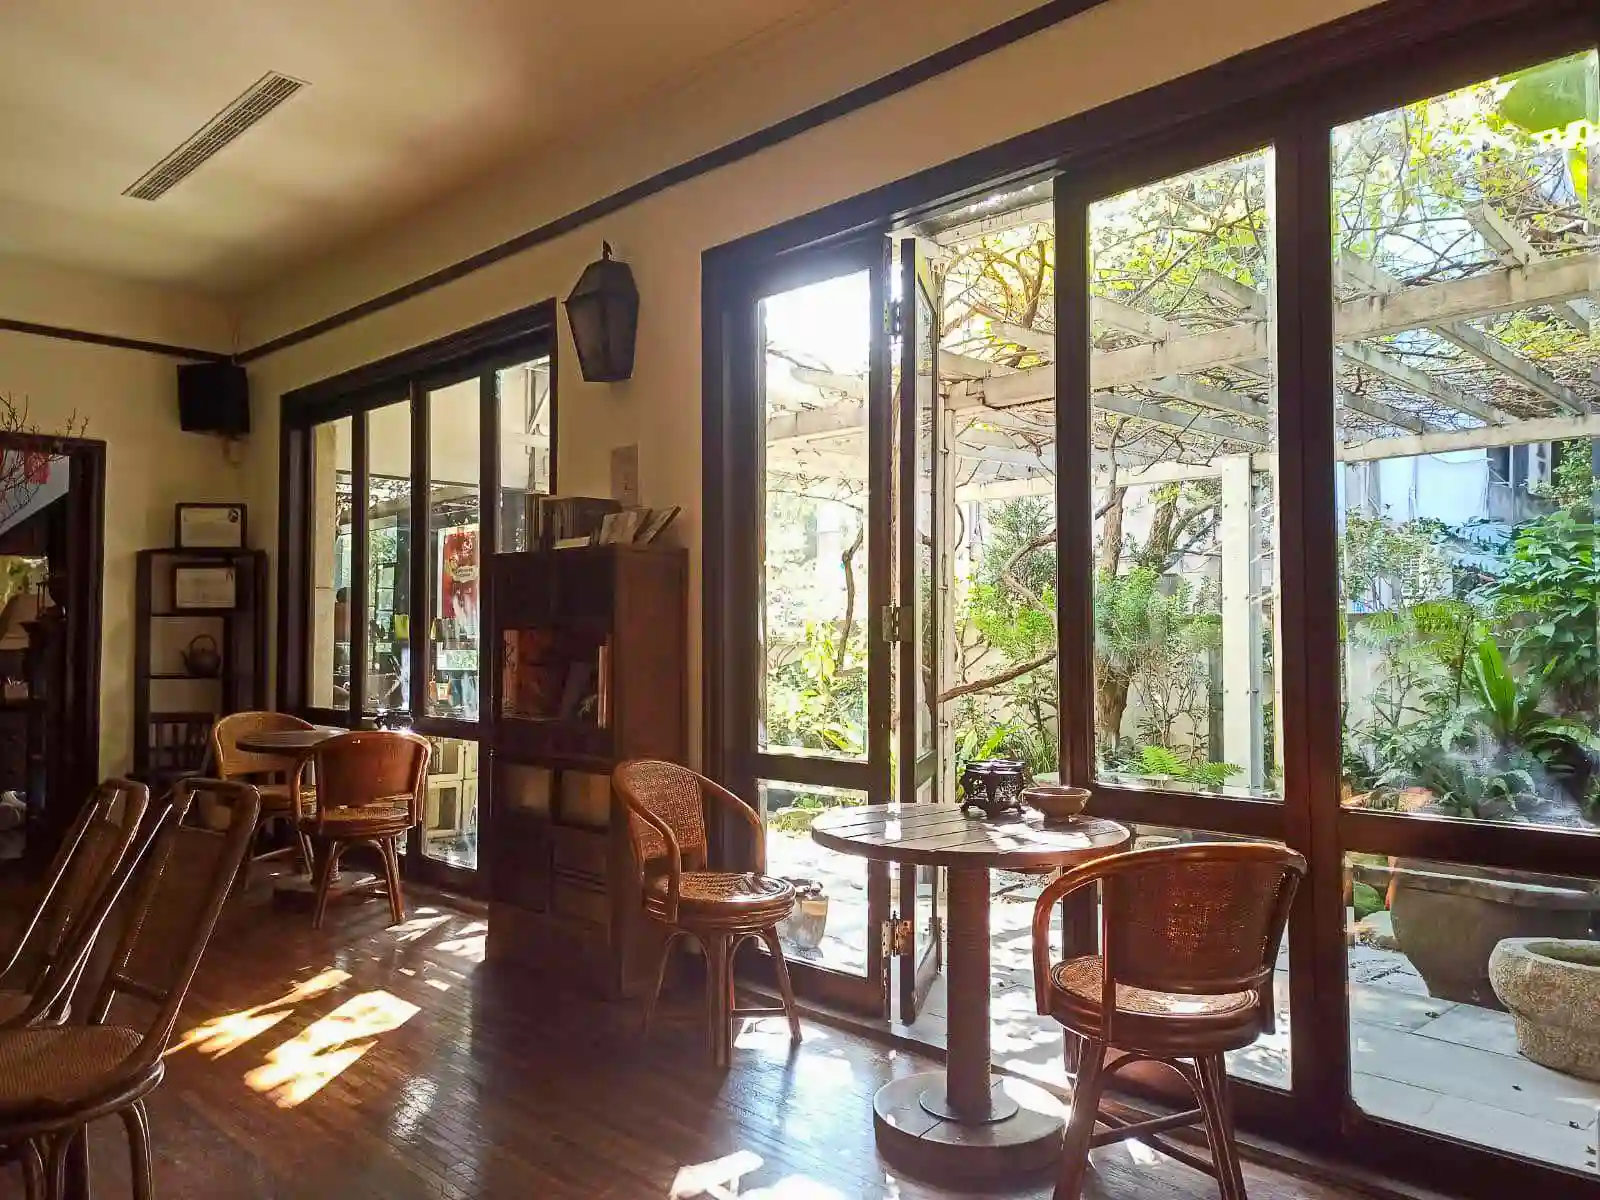 Sunlight shines through floor-to-ceiling windows illuminating one tea room in Wistaria Tea House.